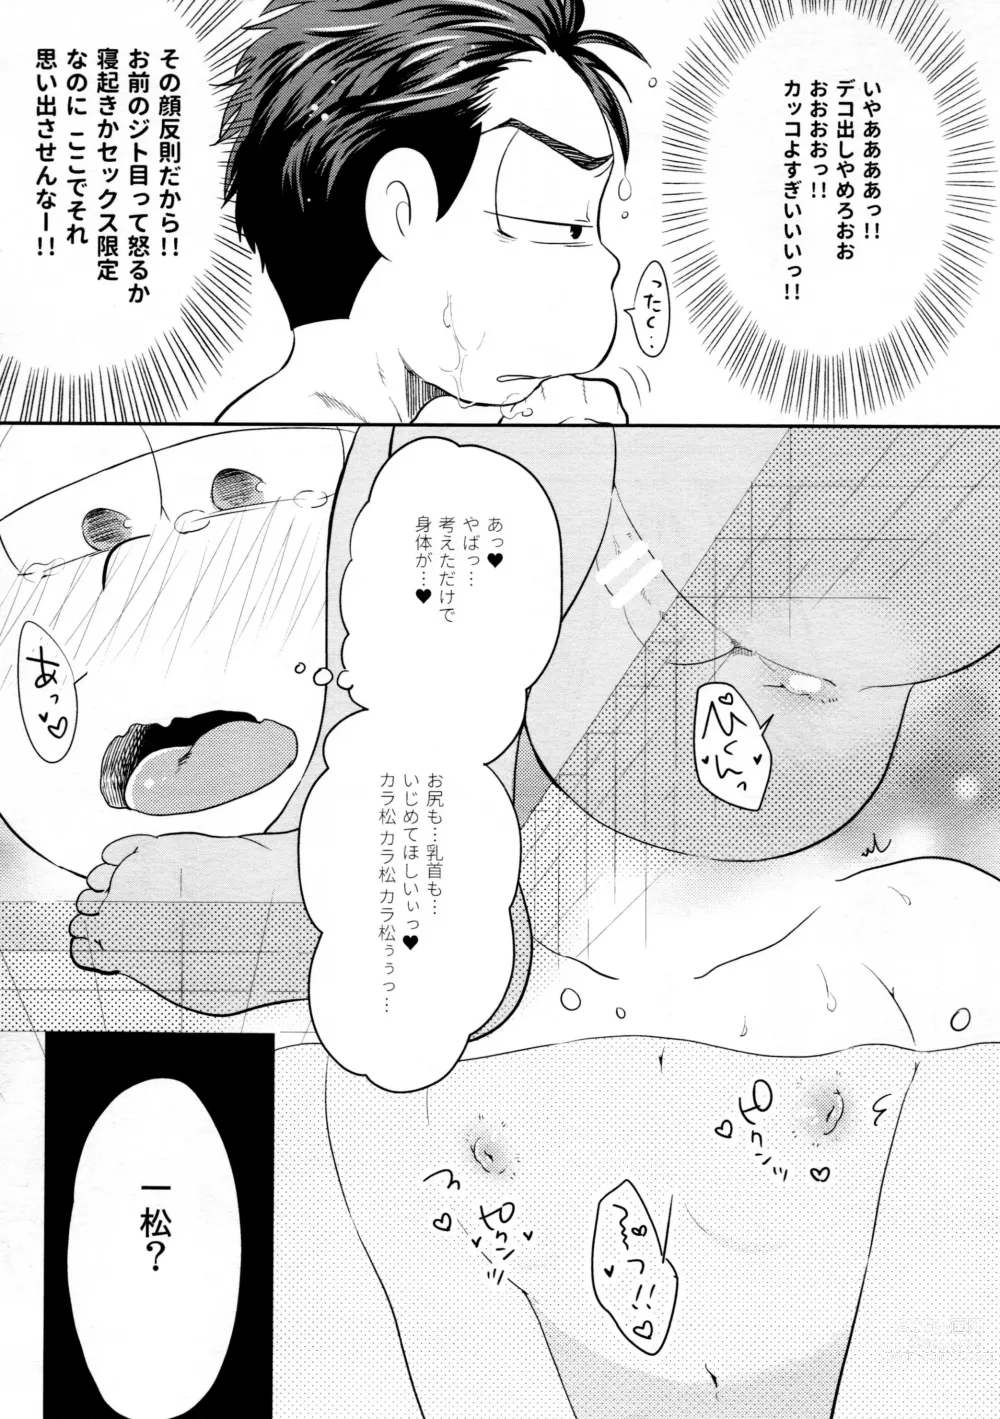 Page 6 of doujinshi Anata Gonomi